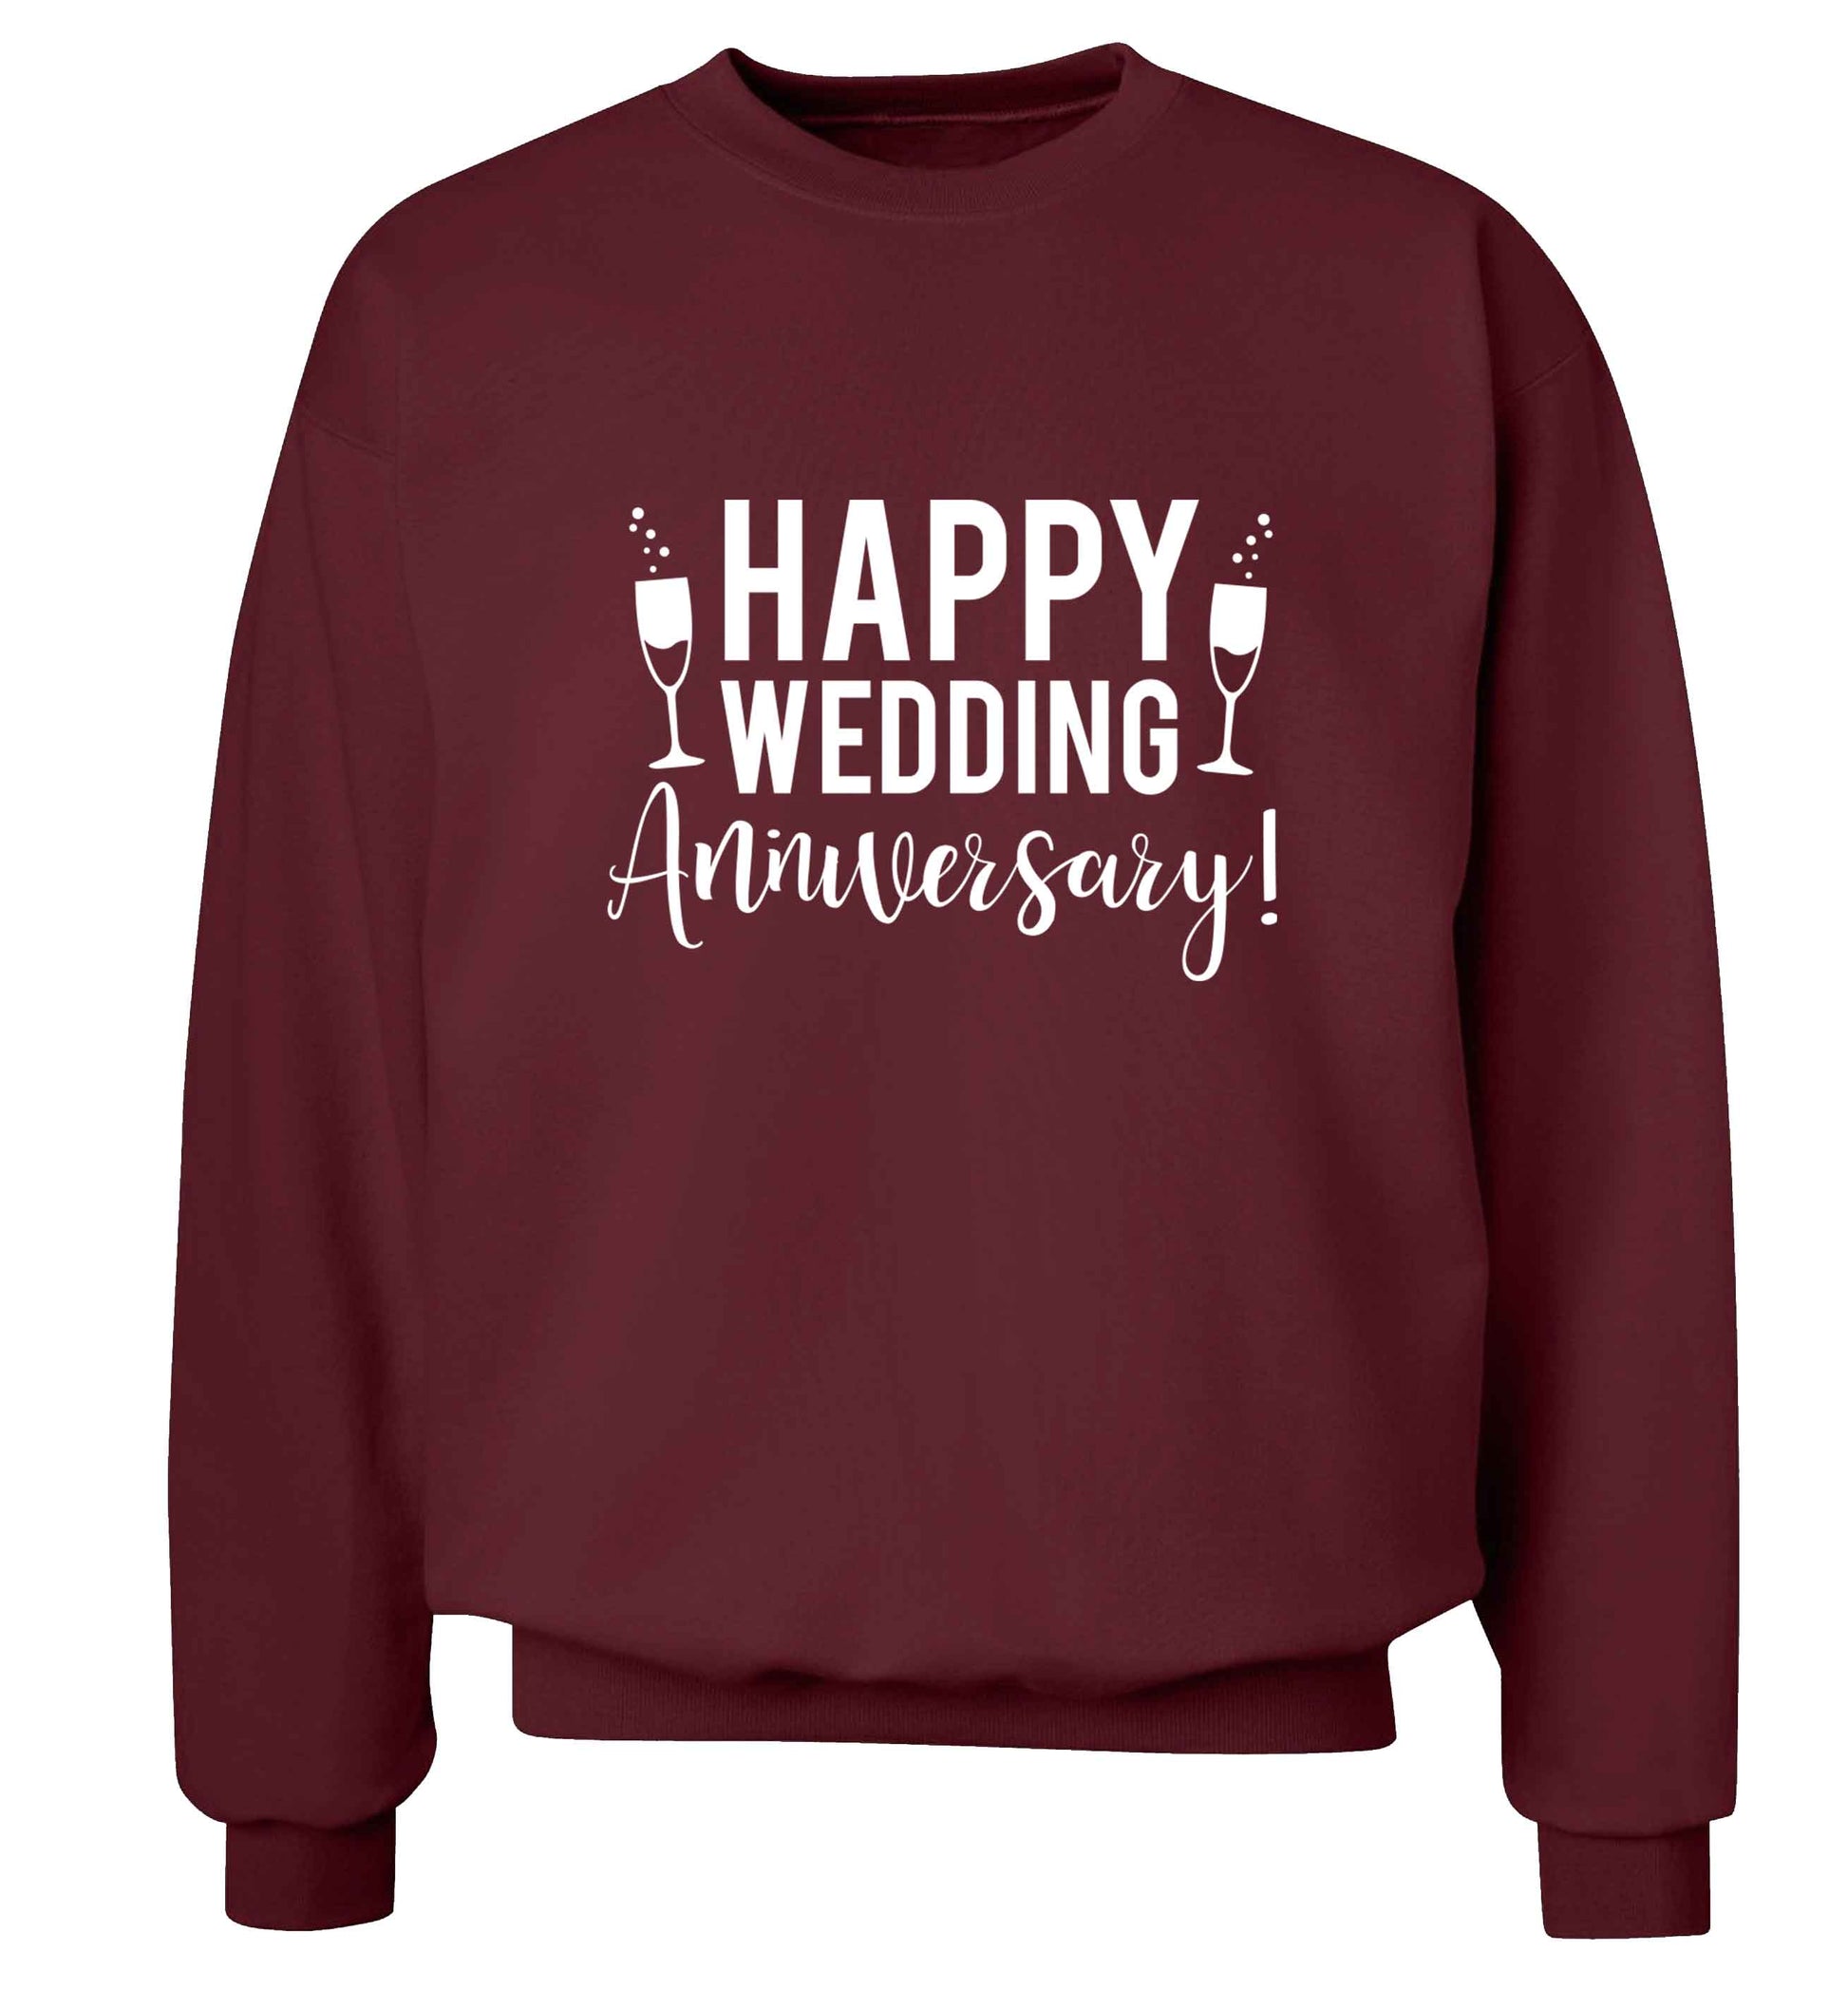 Happy wedding anniversary! adult's unisex maroon sweater 2XL